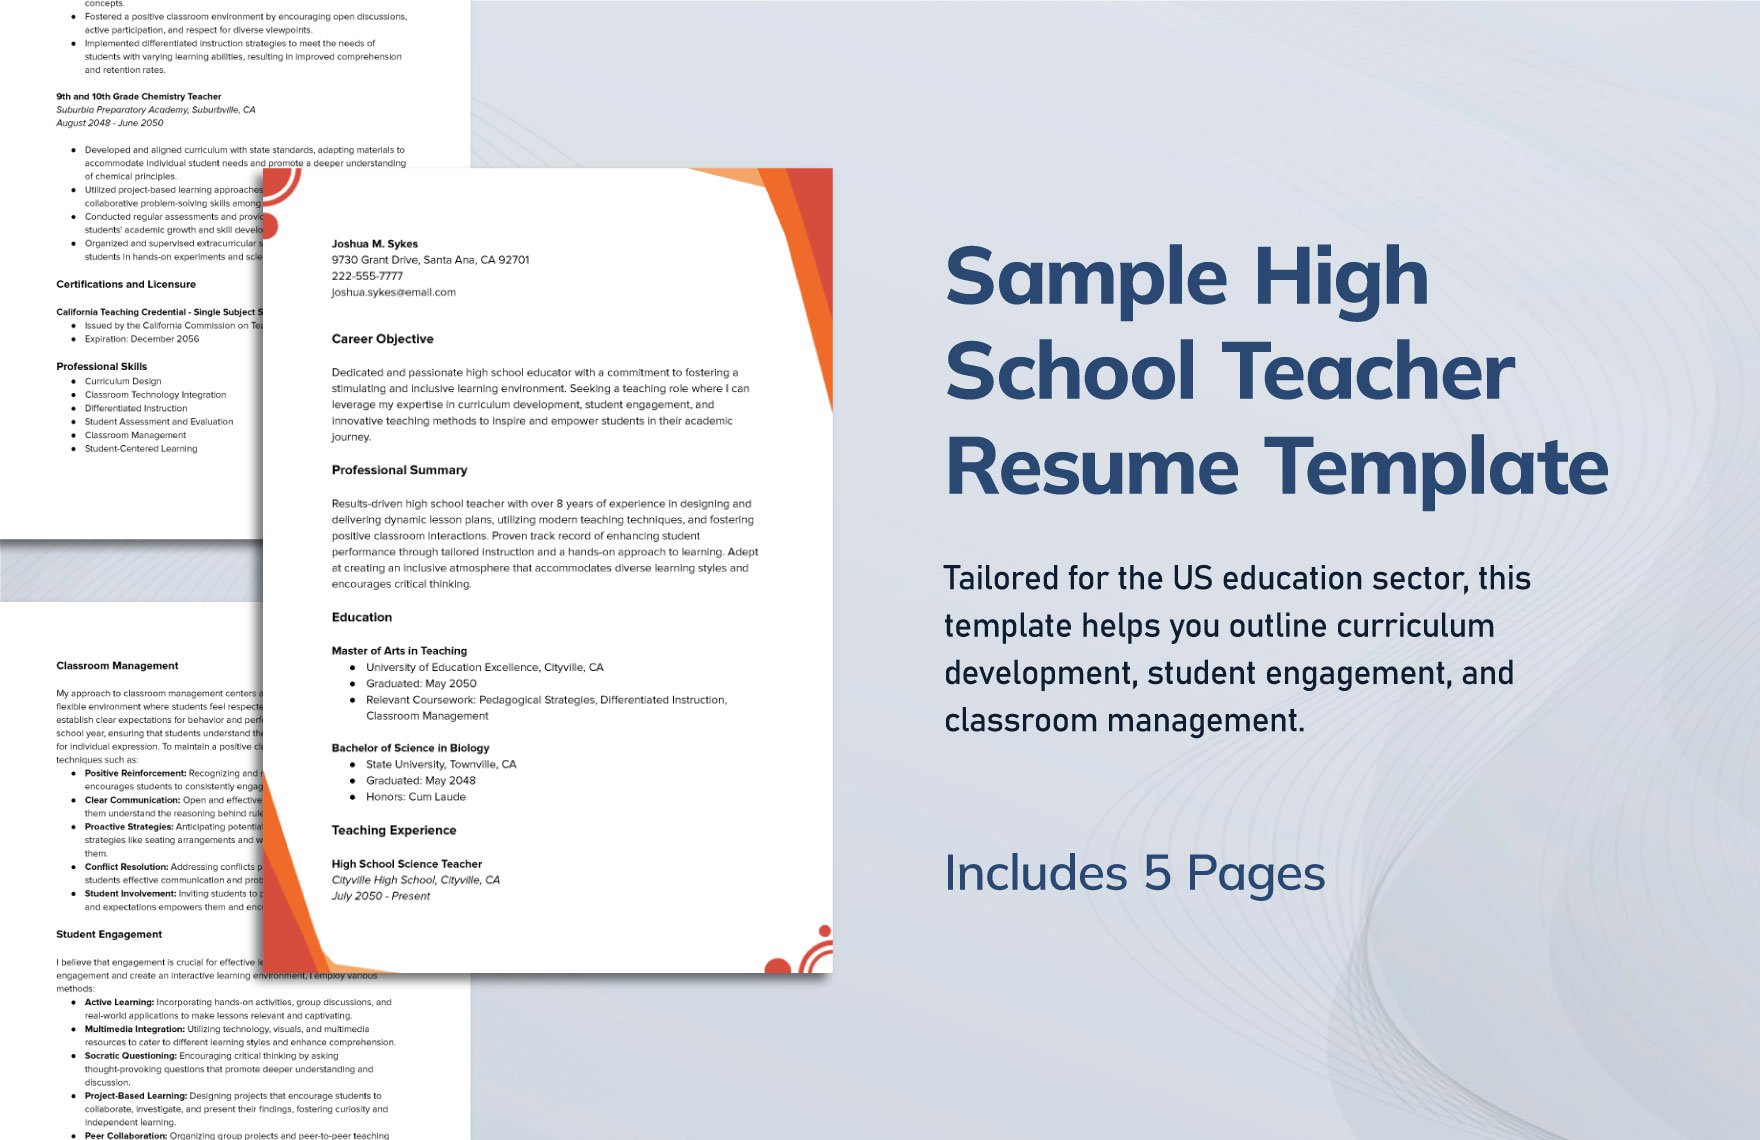 sample-high-school-teacher-resume